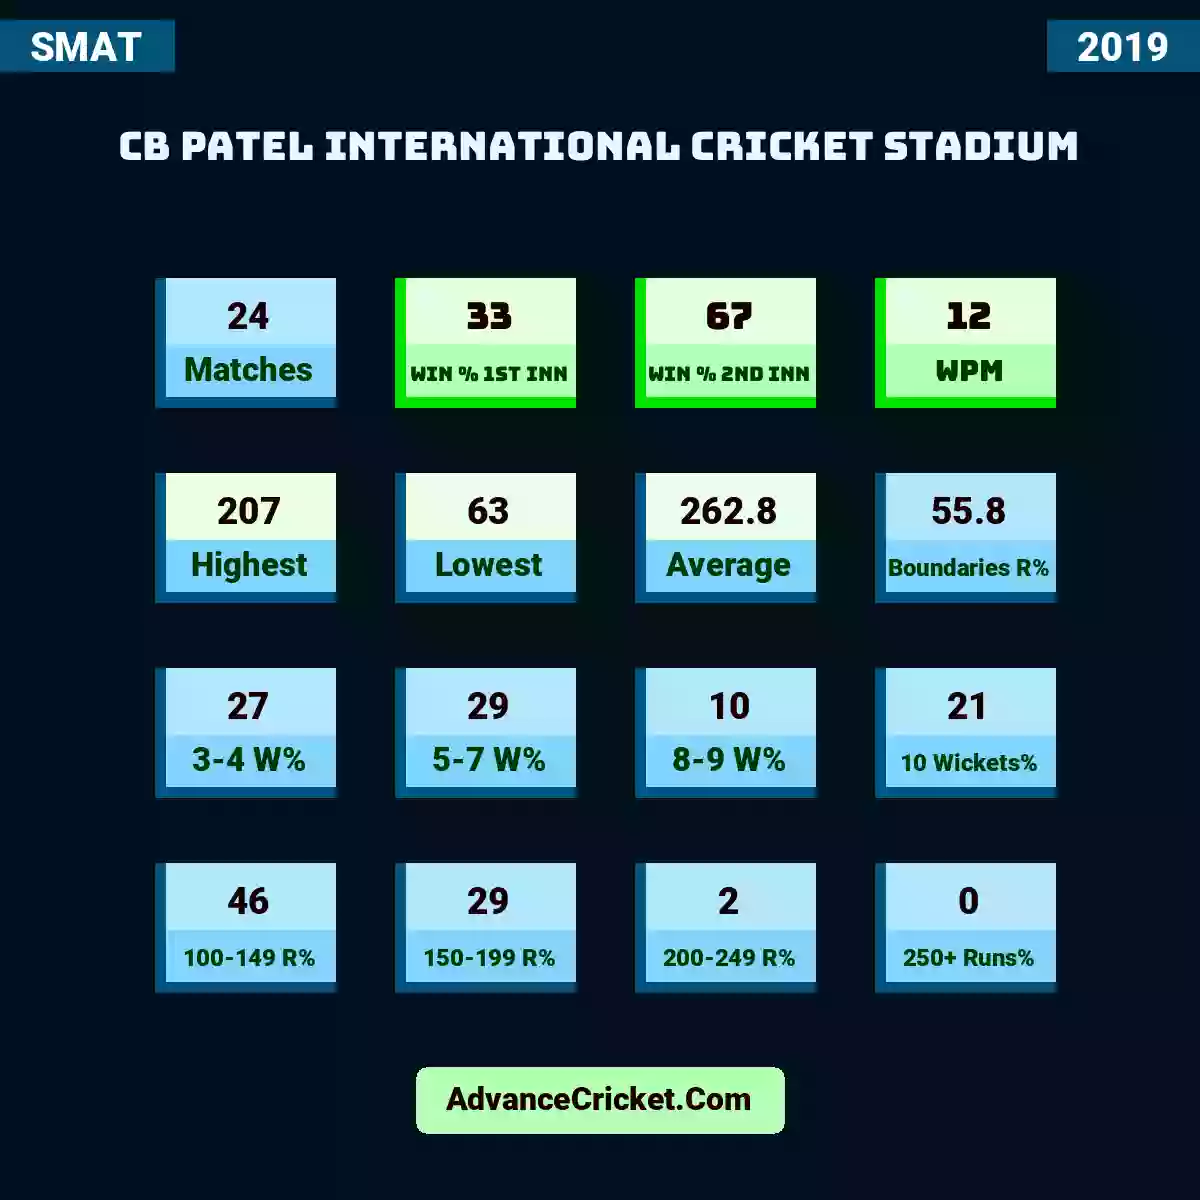 Image showing CB Patel International Cricket Stadium with Matches: 24, Win % 1st Inn: 33, Win % 2nd Inn: 67, WPM: 12, Highest: 207, Lowest: 63, Average: 262.8, Boundaries R%: 55.8, 3-4 W%: 27, 5-7 W%: 29, 8-9 W%: 10, 10 Wickets%: 21, 100-149 R%: 46, 150-199 R%: 29, 200-249 R%: 2, 250+ Runs%: 0.